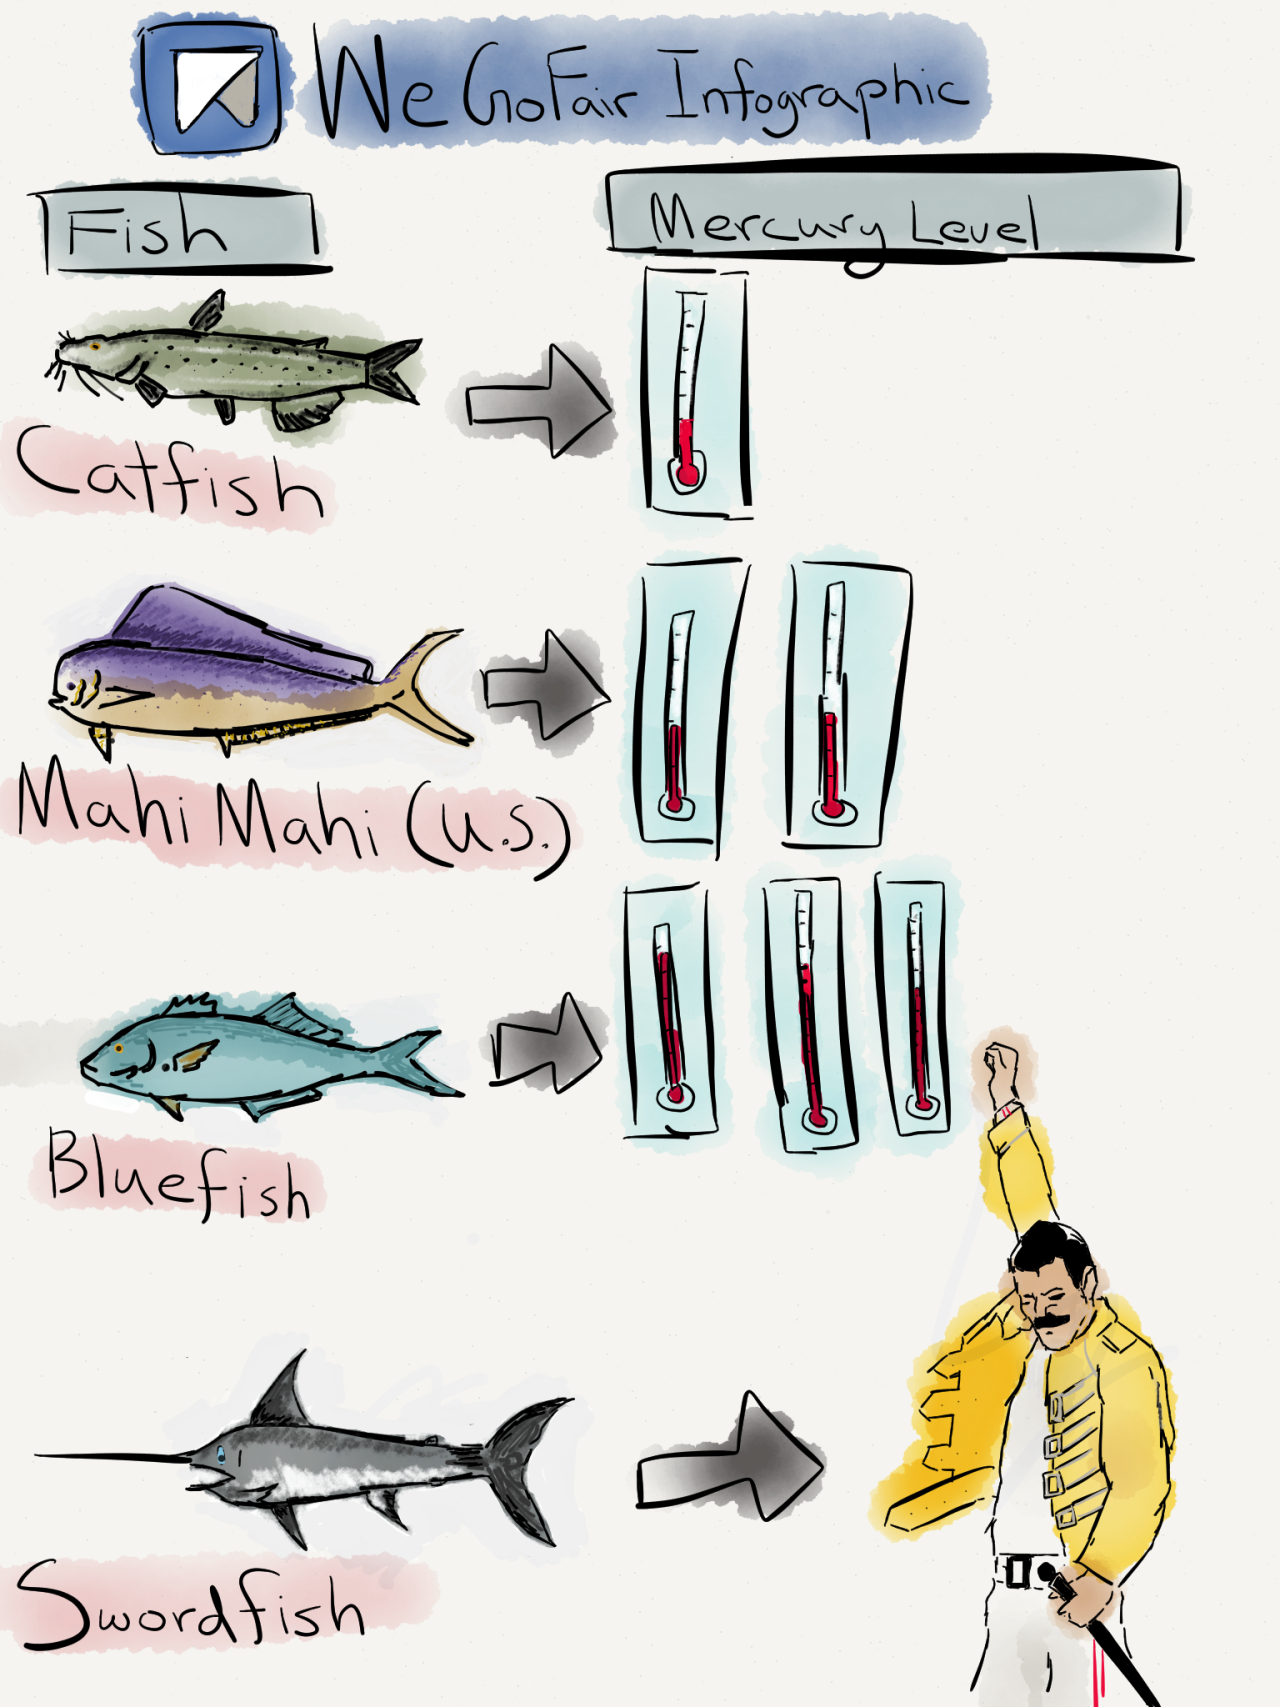 (Seafood + Infographic + Freddie Mercury) x Paper = Awesome
Full post at www.wegofair.com/blog